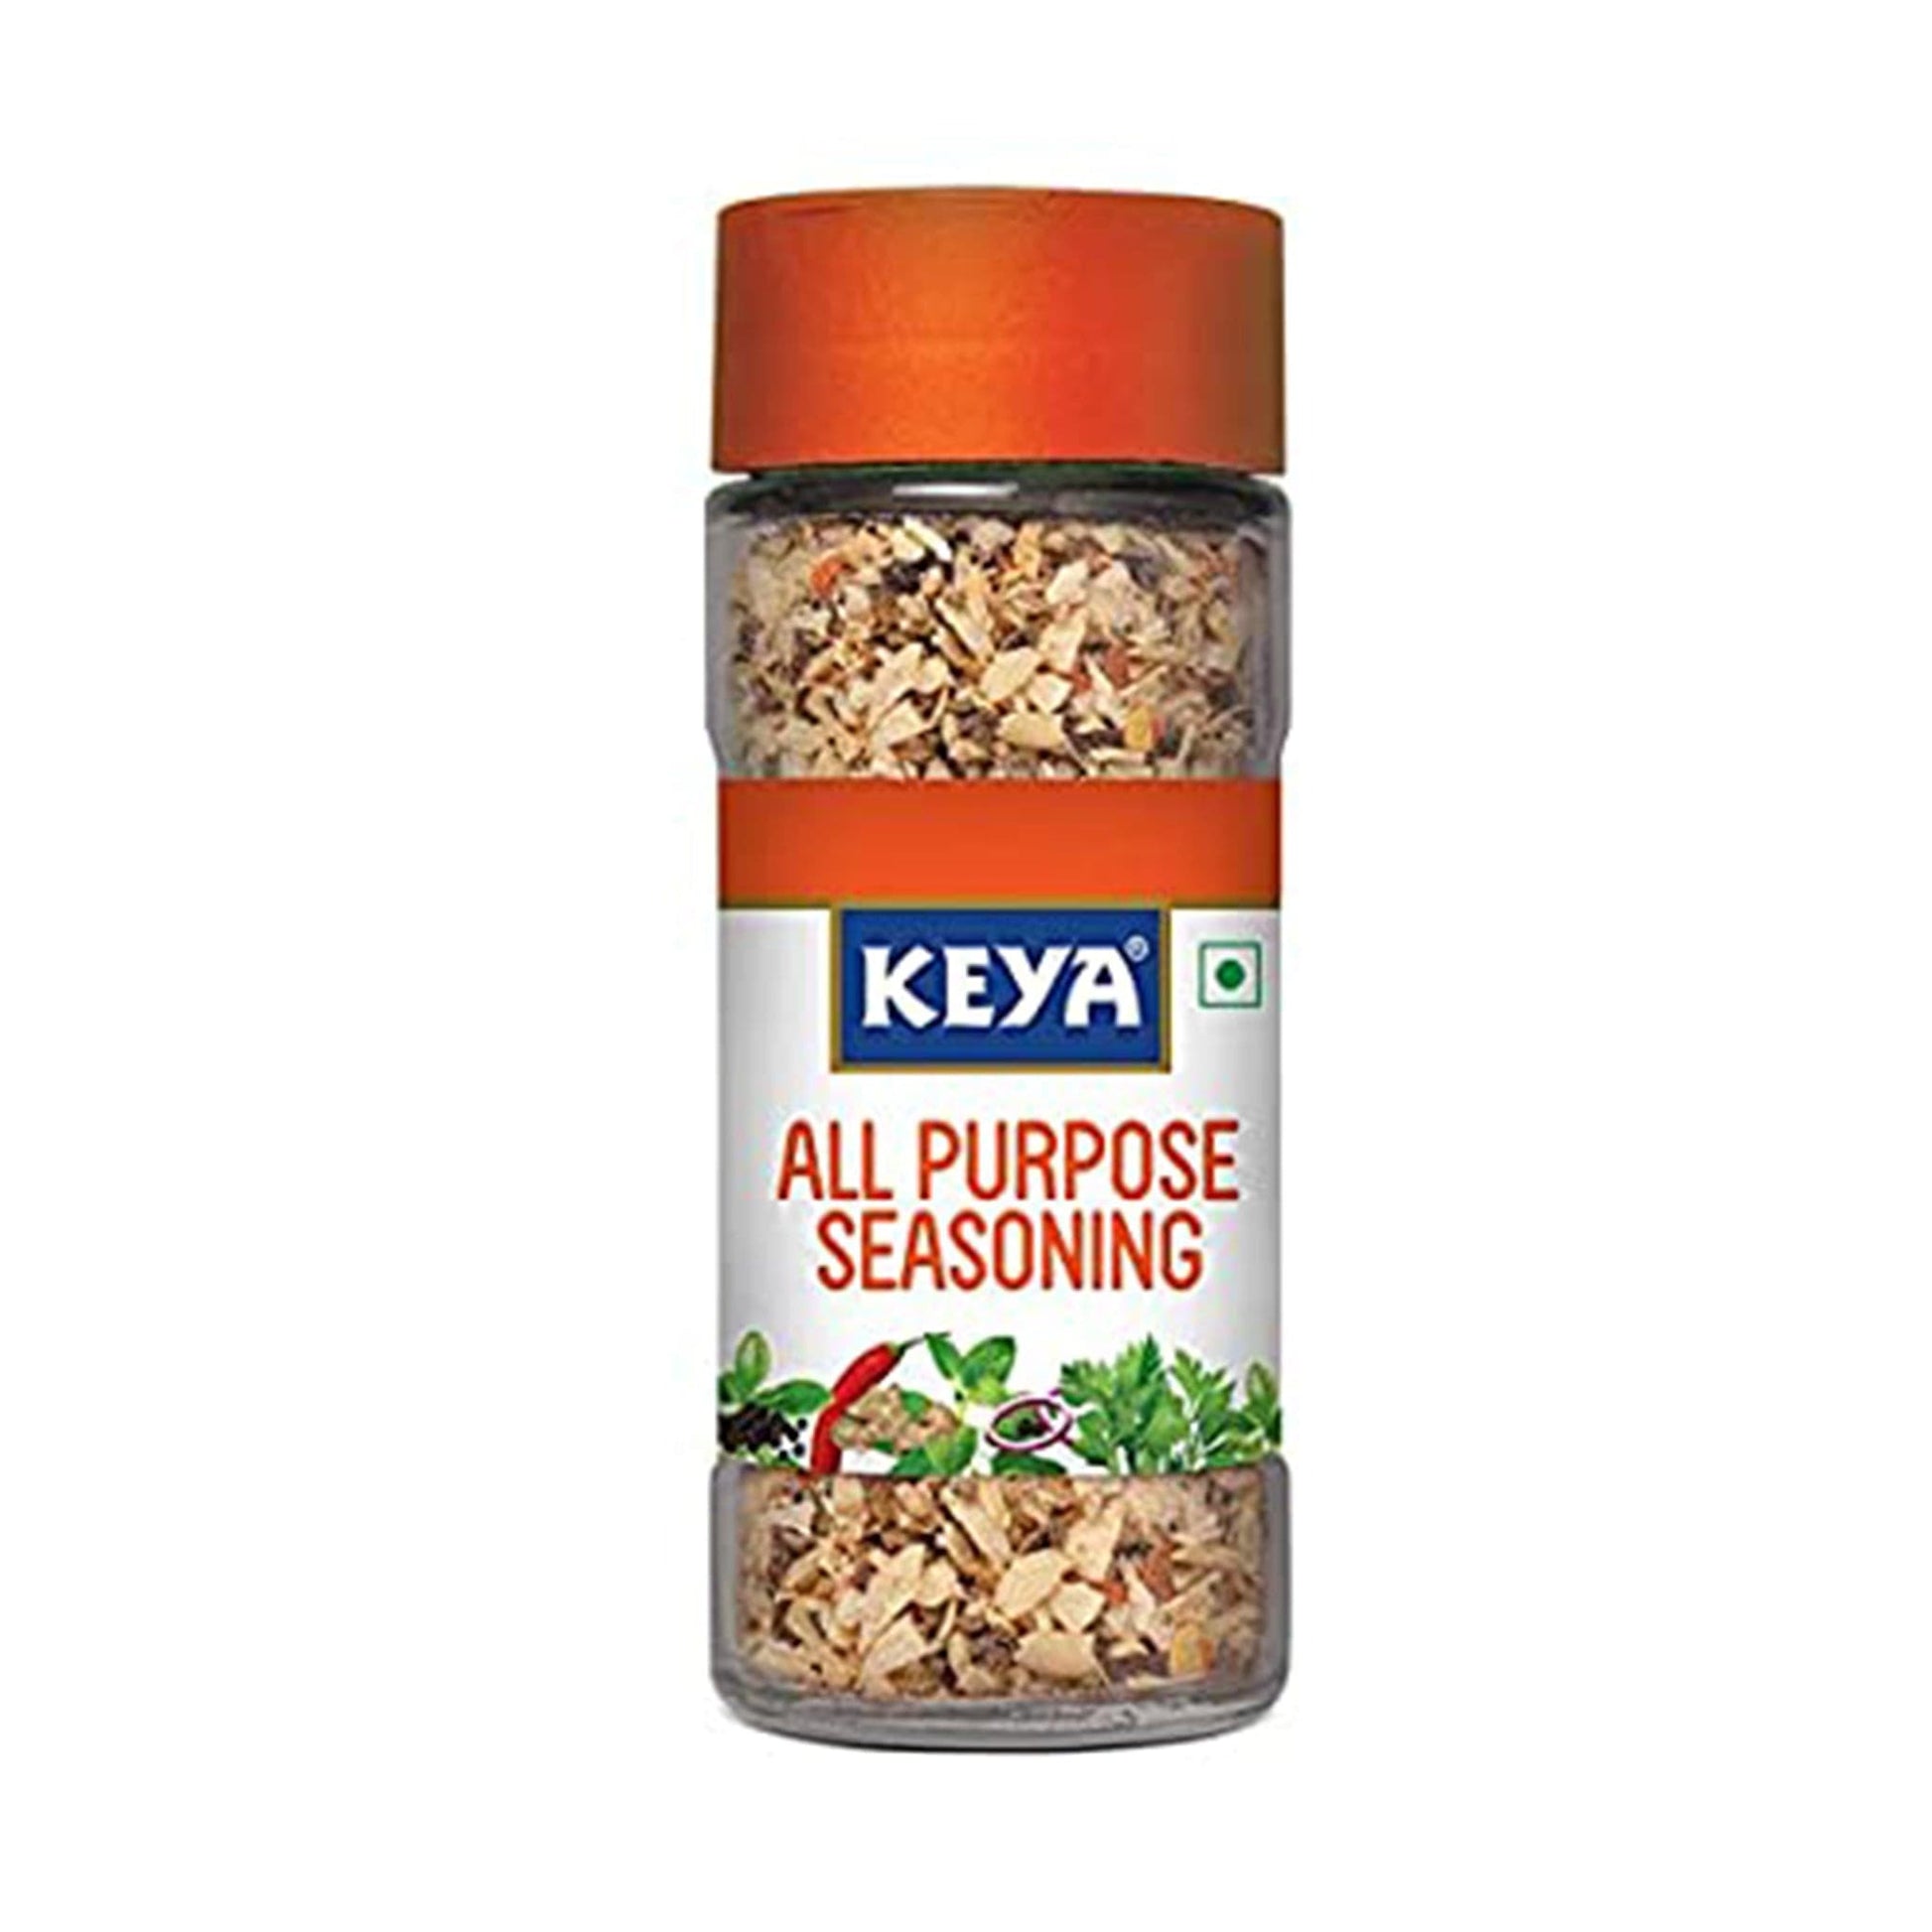 Keya All Purpose Seasoning (7047388266683)